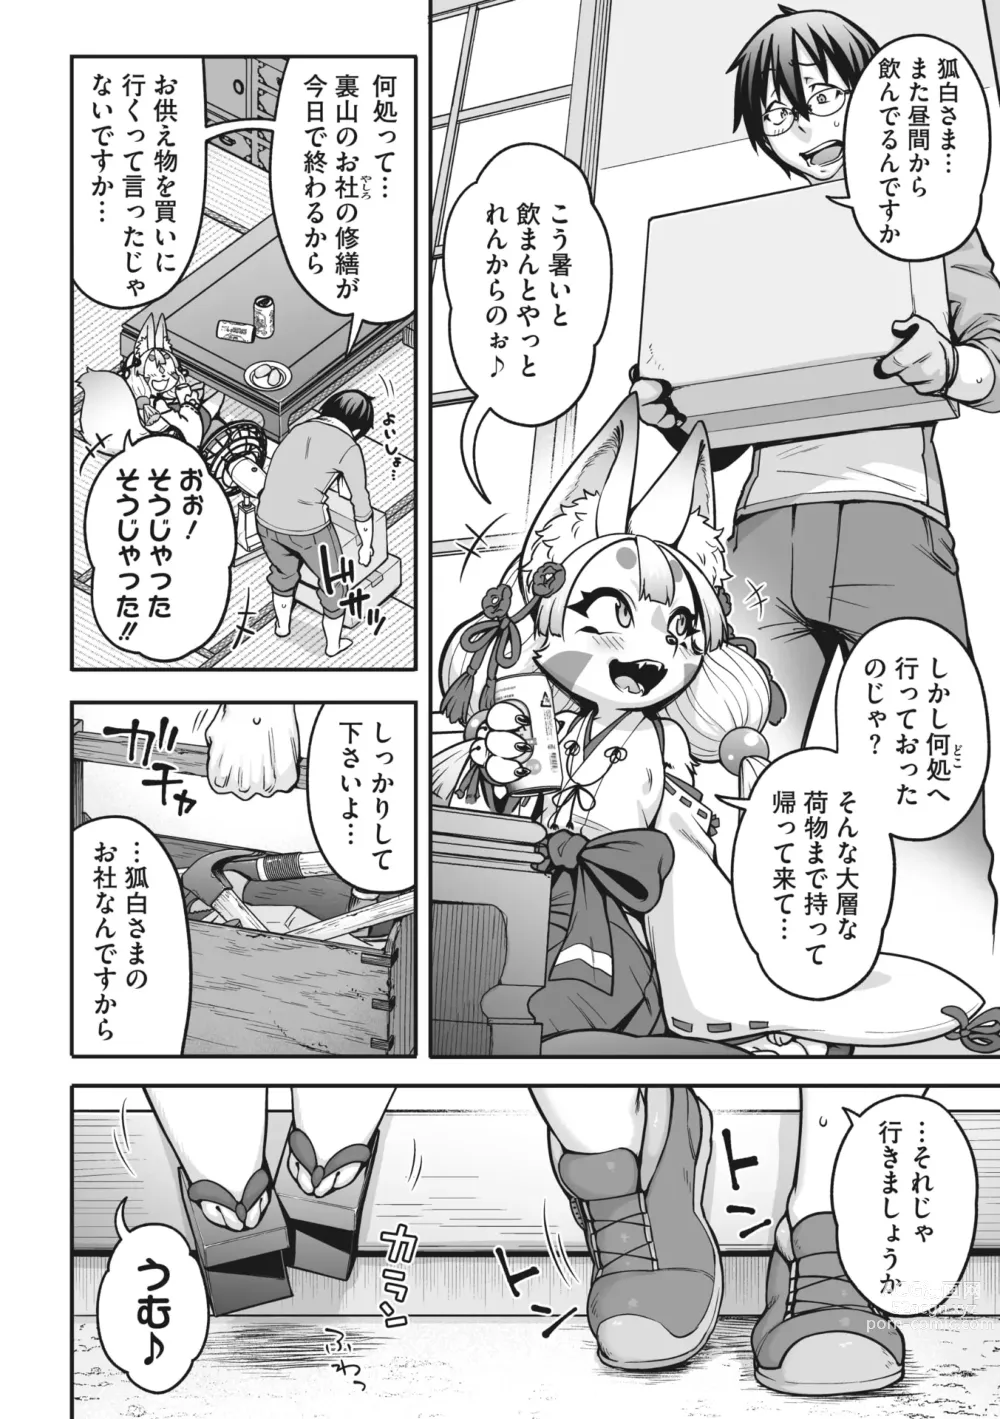 Page 4 of manga COMIC GAIRA Vol. 15